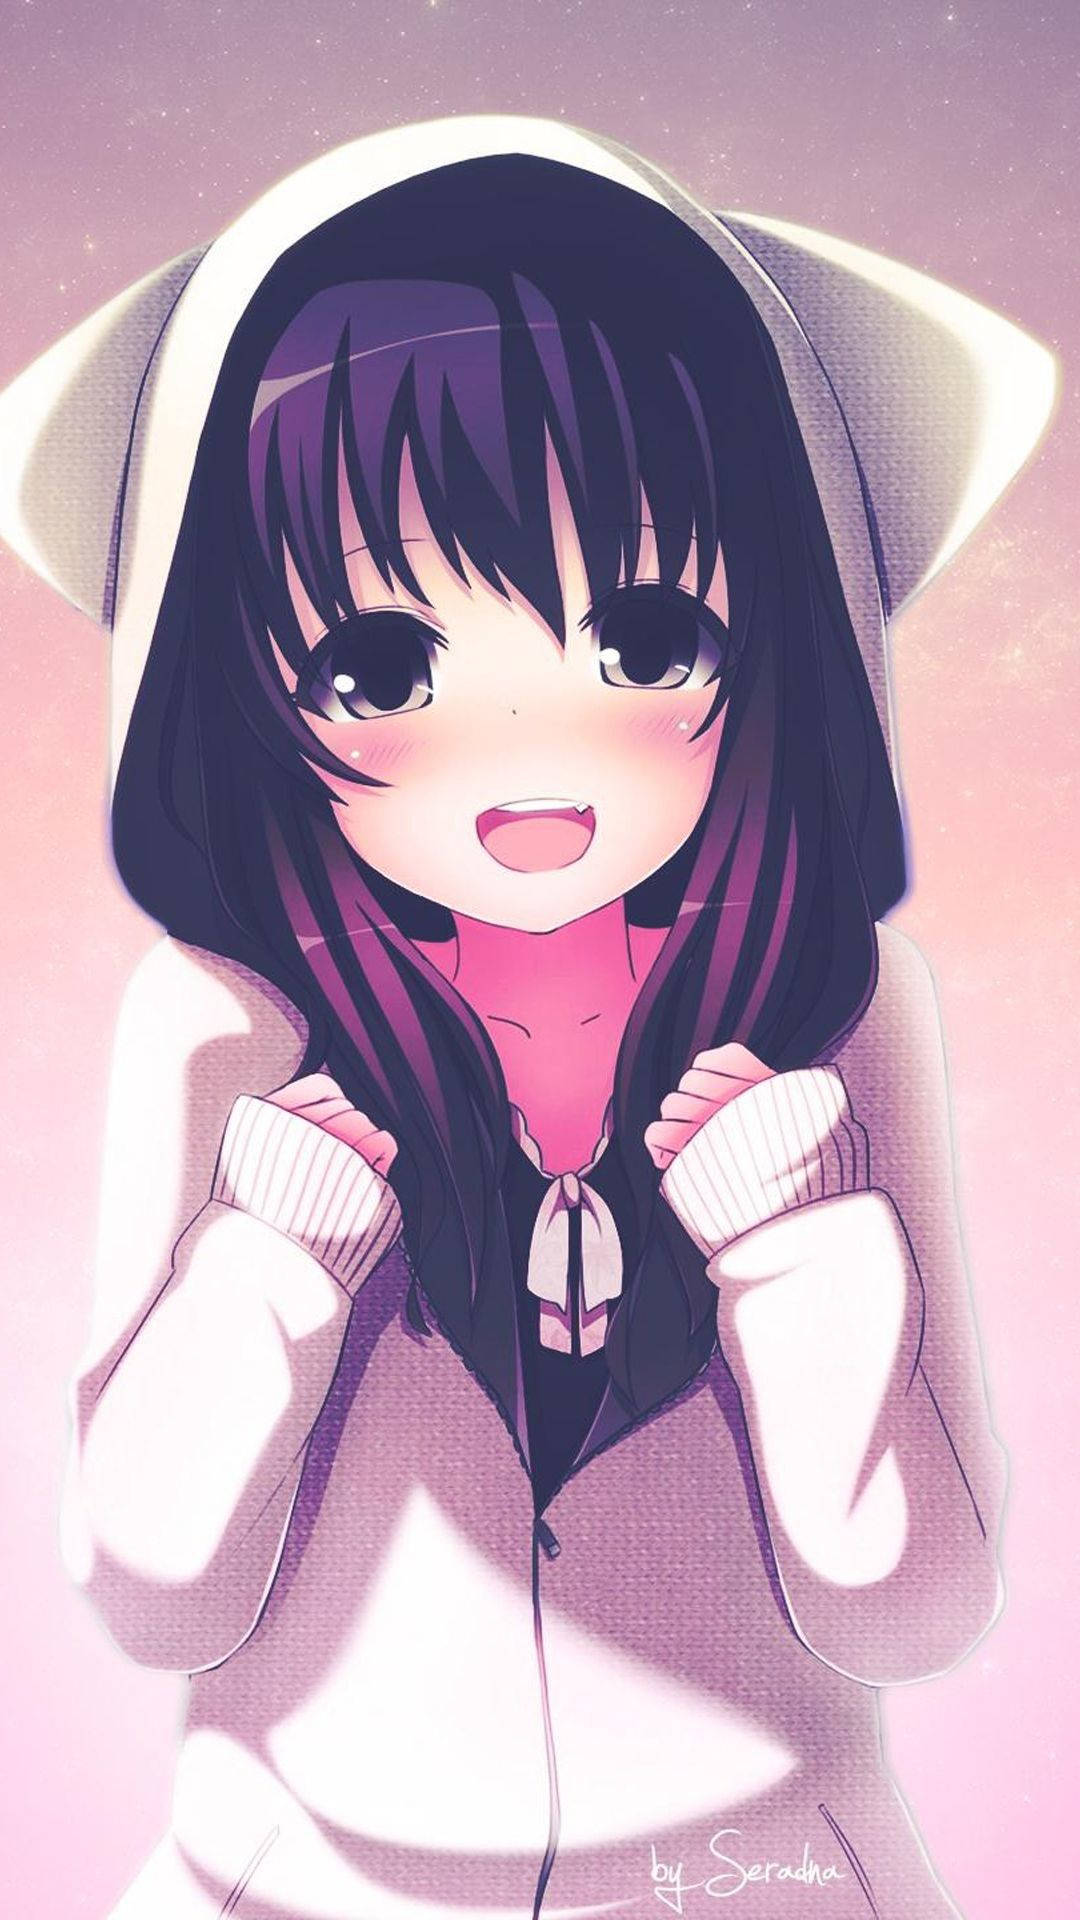 Free Cute Anime Girl Iphone Wallpaper Downloads, [100+] Cute Anime Girl  Iphone Wallpapers for FREE 